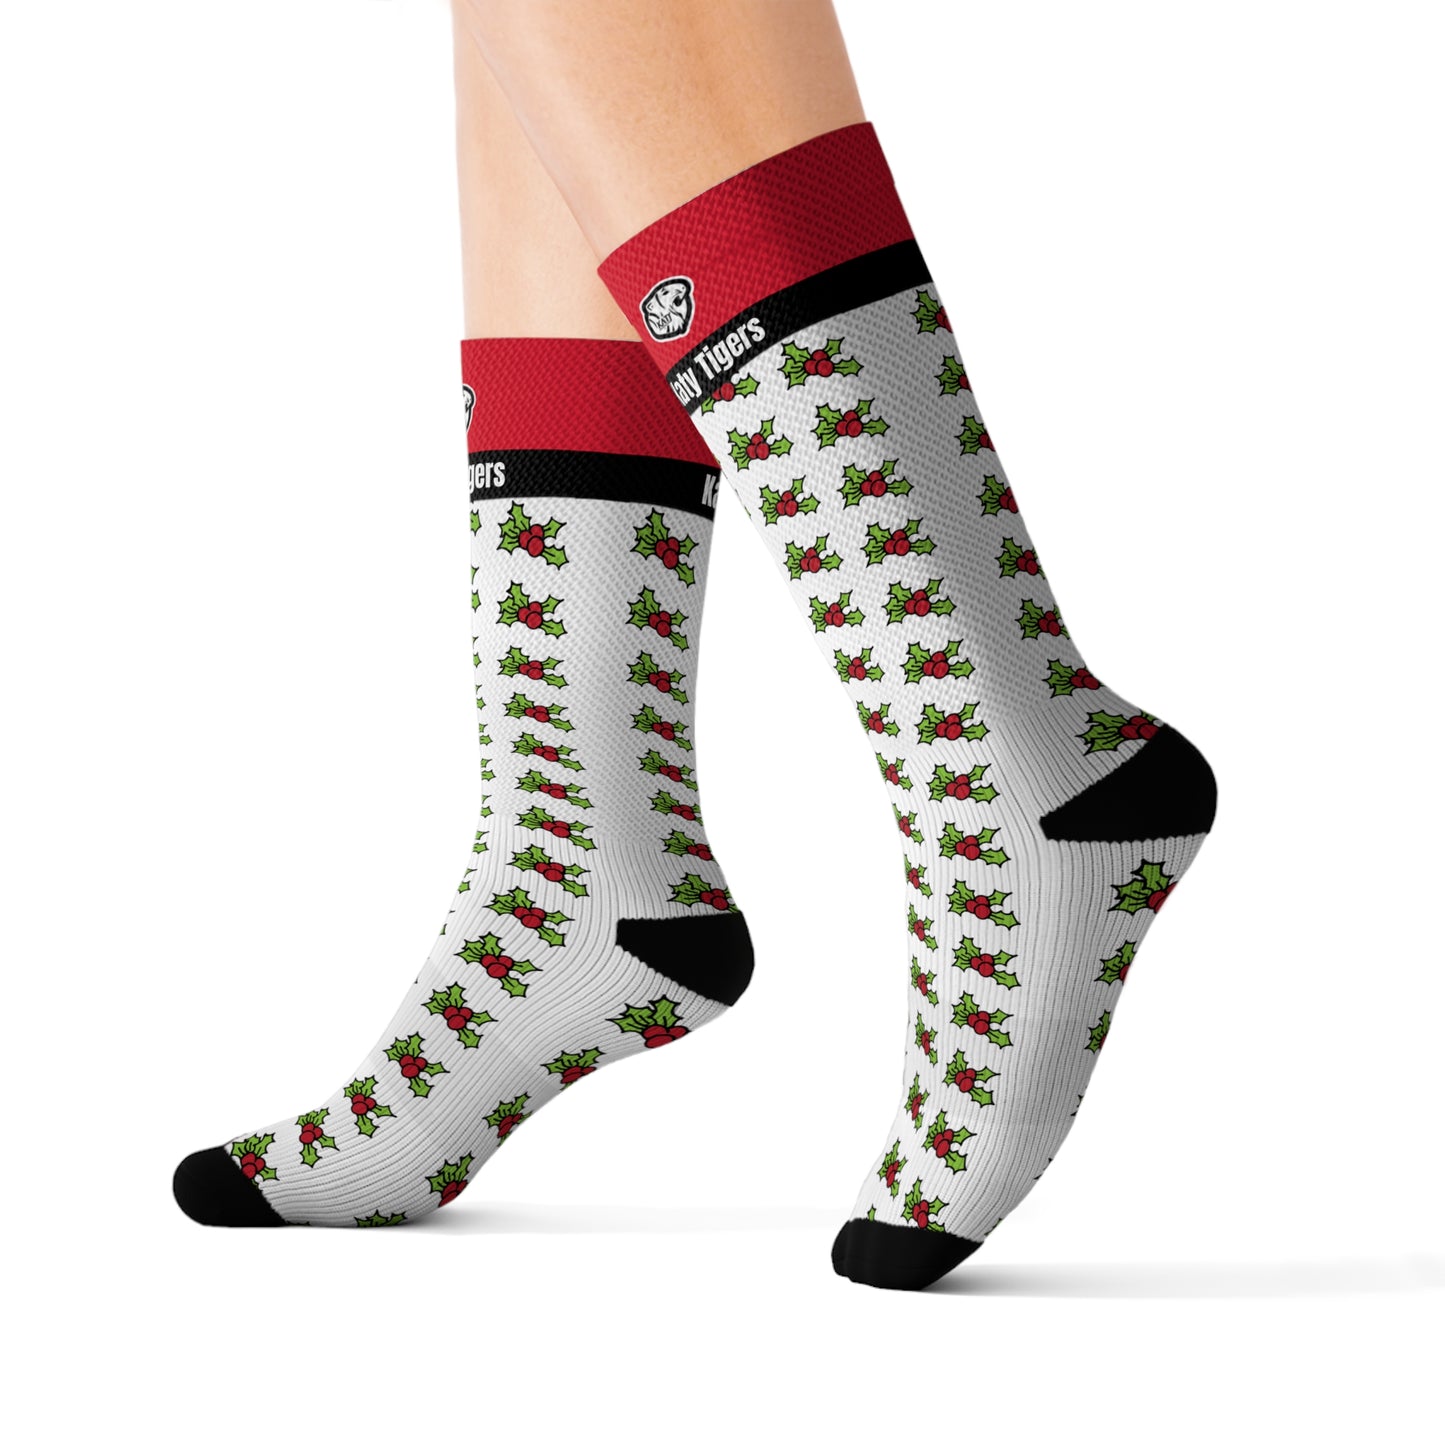 KHS - "Mistletoe" Sublimation Socks